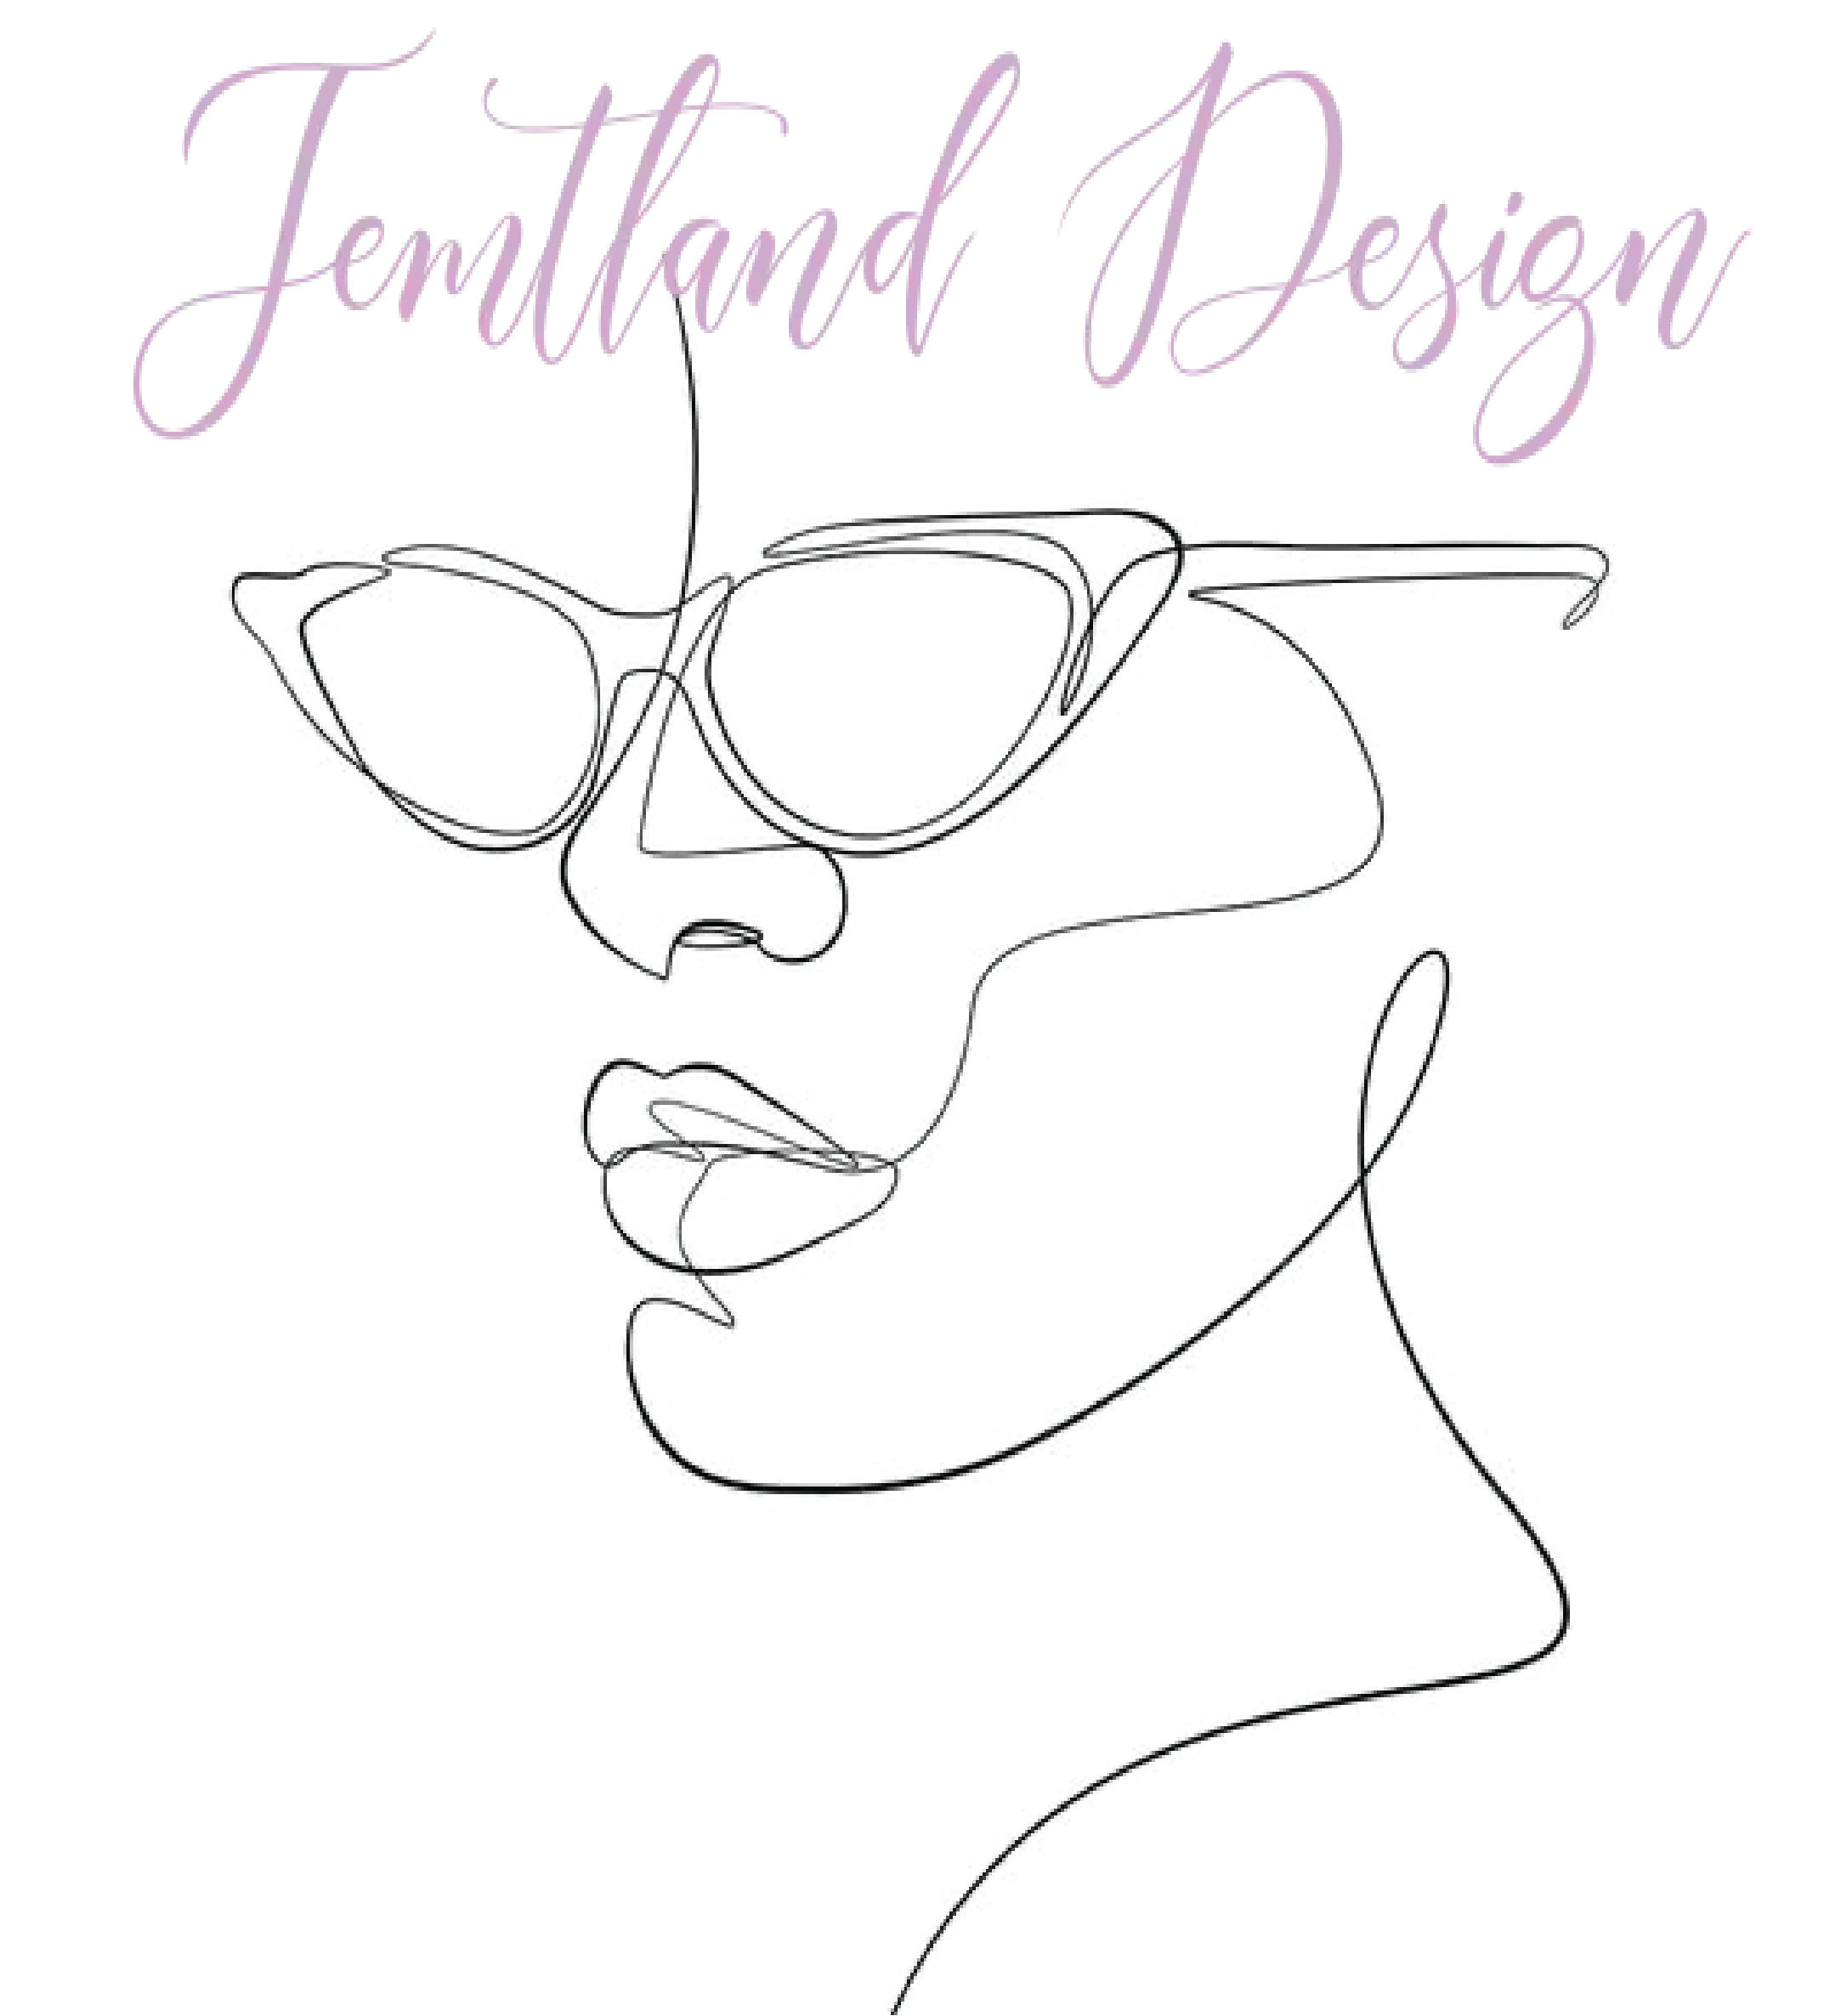 jemtlanddesign.com